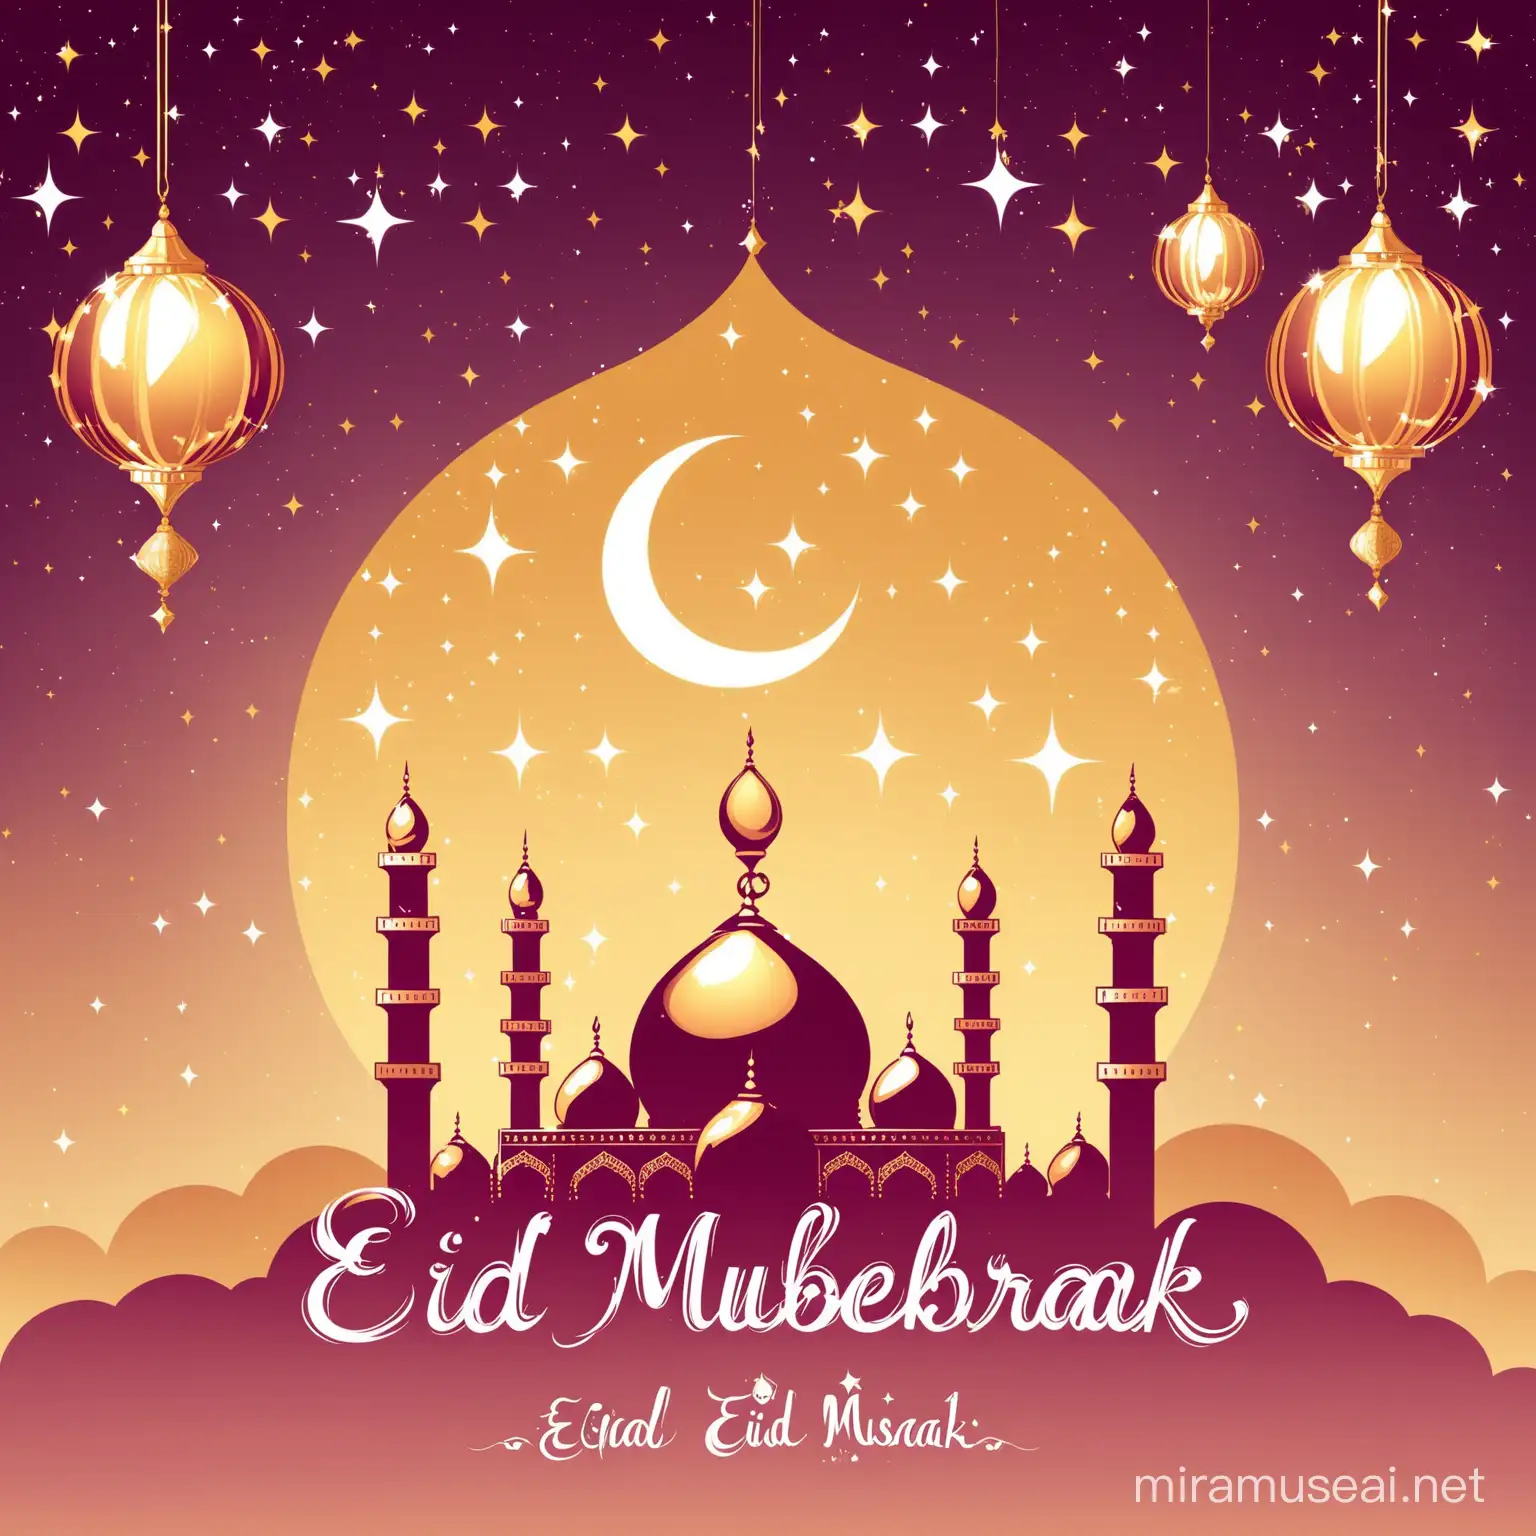 Celebrating Eid Mubarak with Colorful Lanterns and Traditional Garments